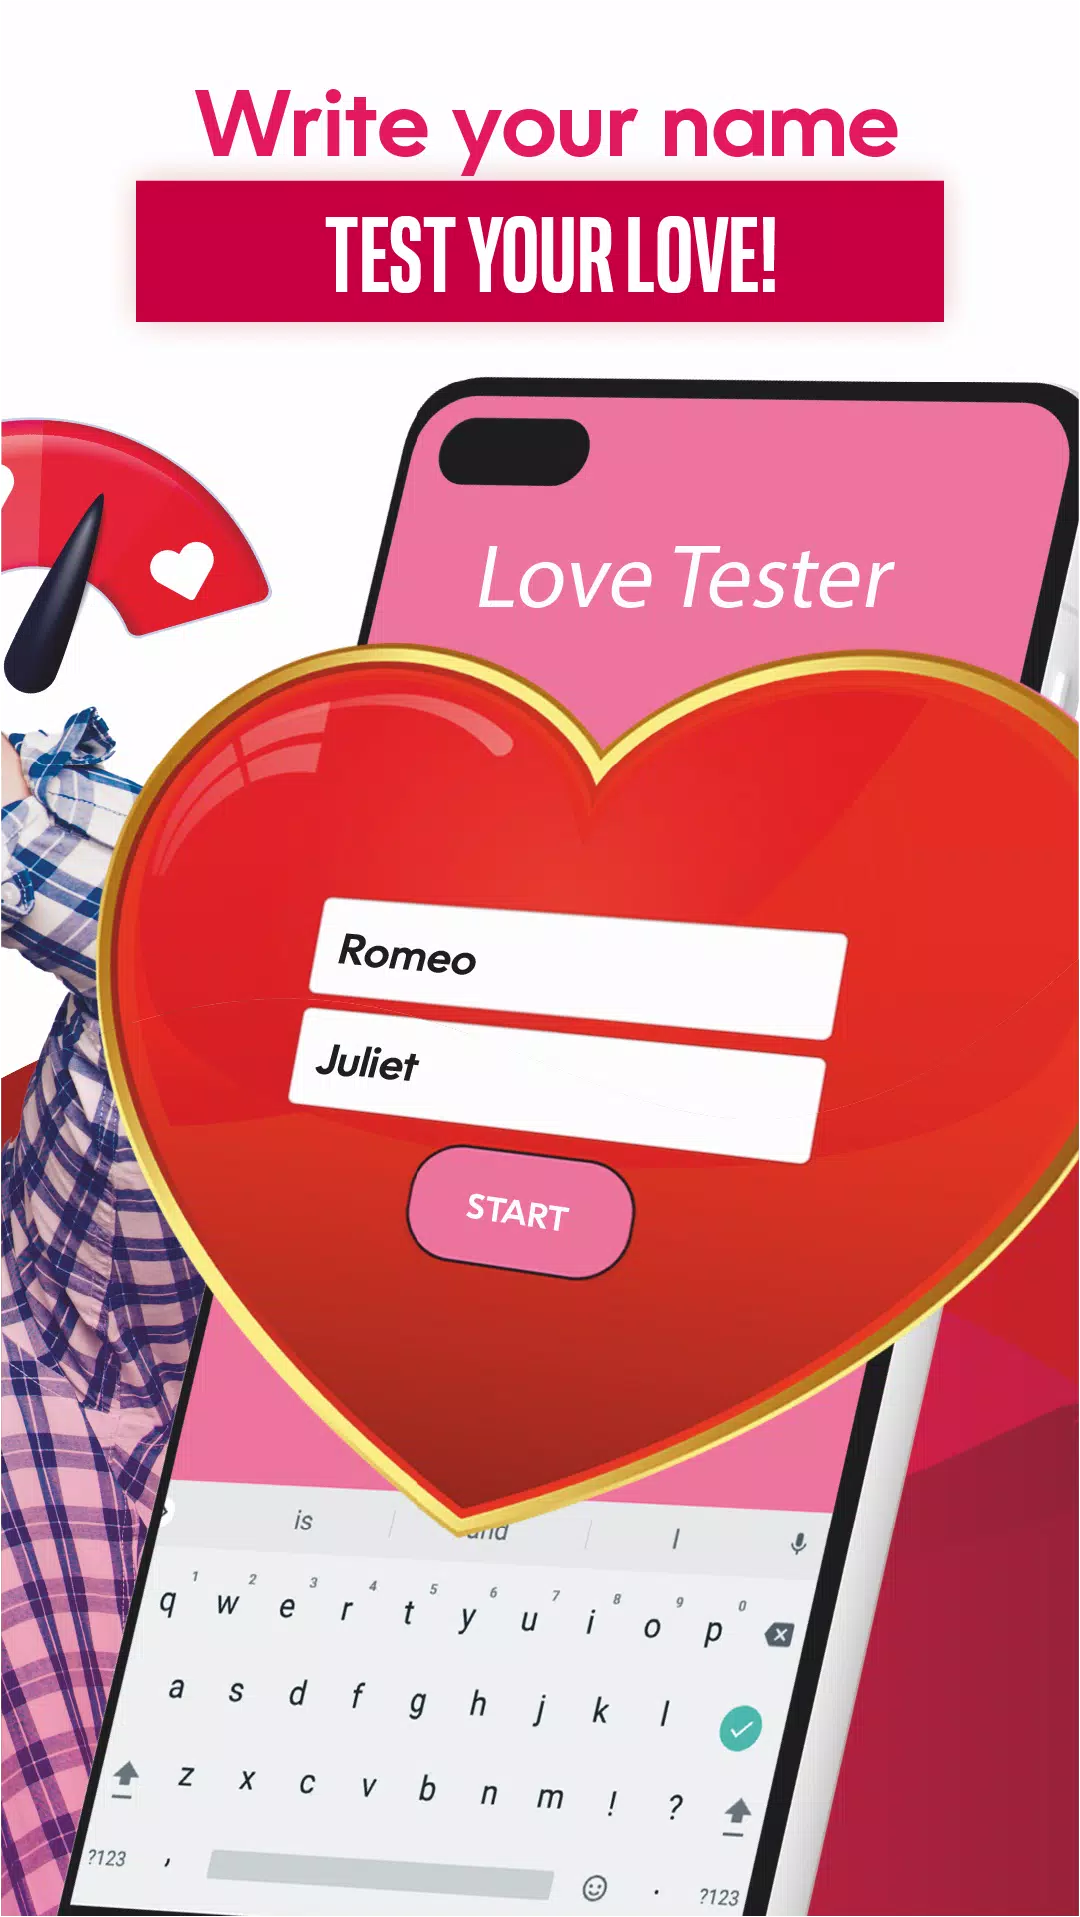 Love Tester - Play UNBLOCKED Love Tester on DooDooLove